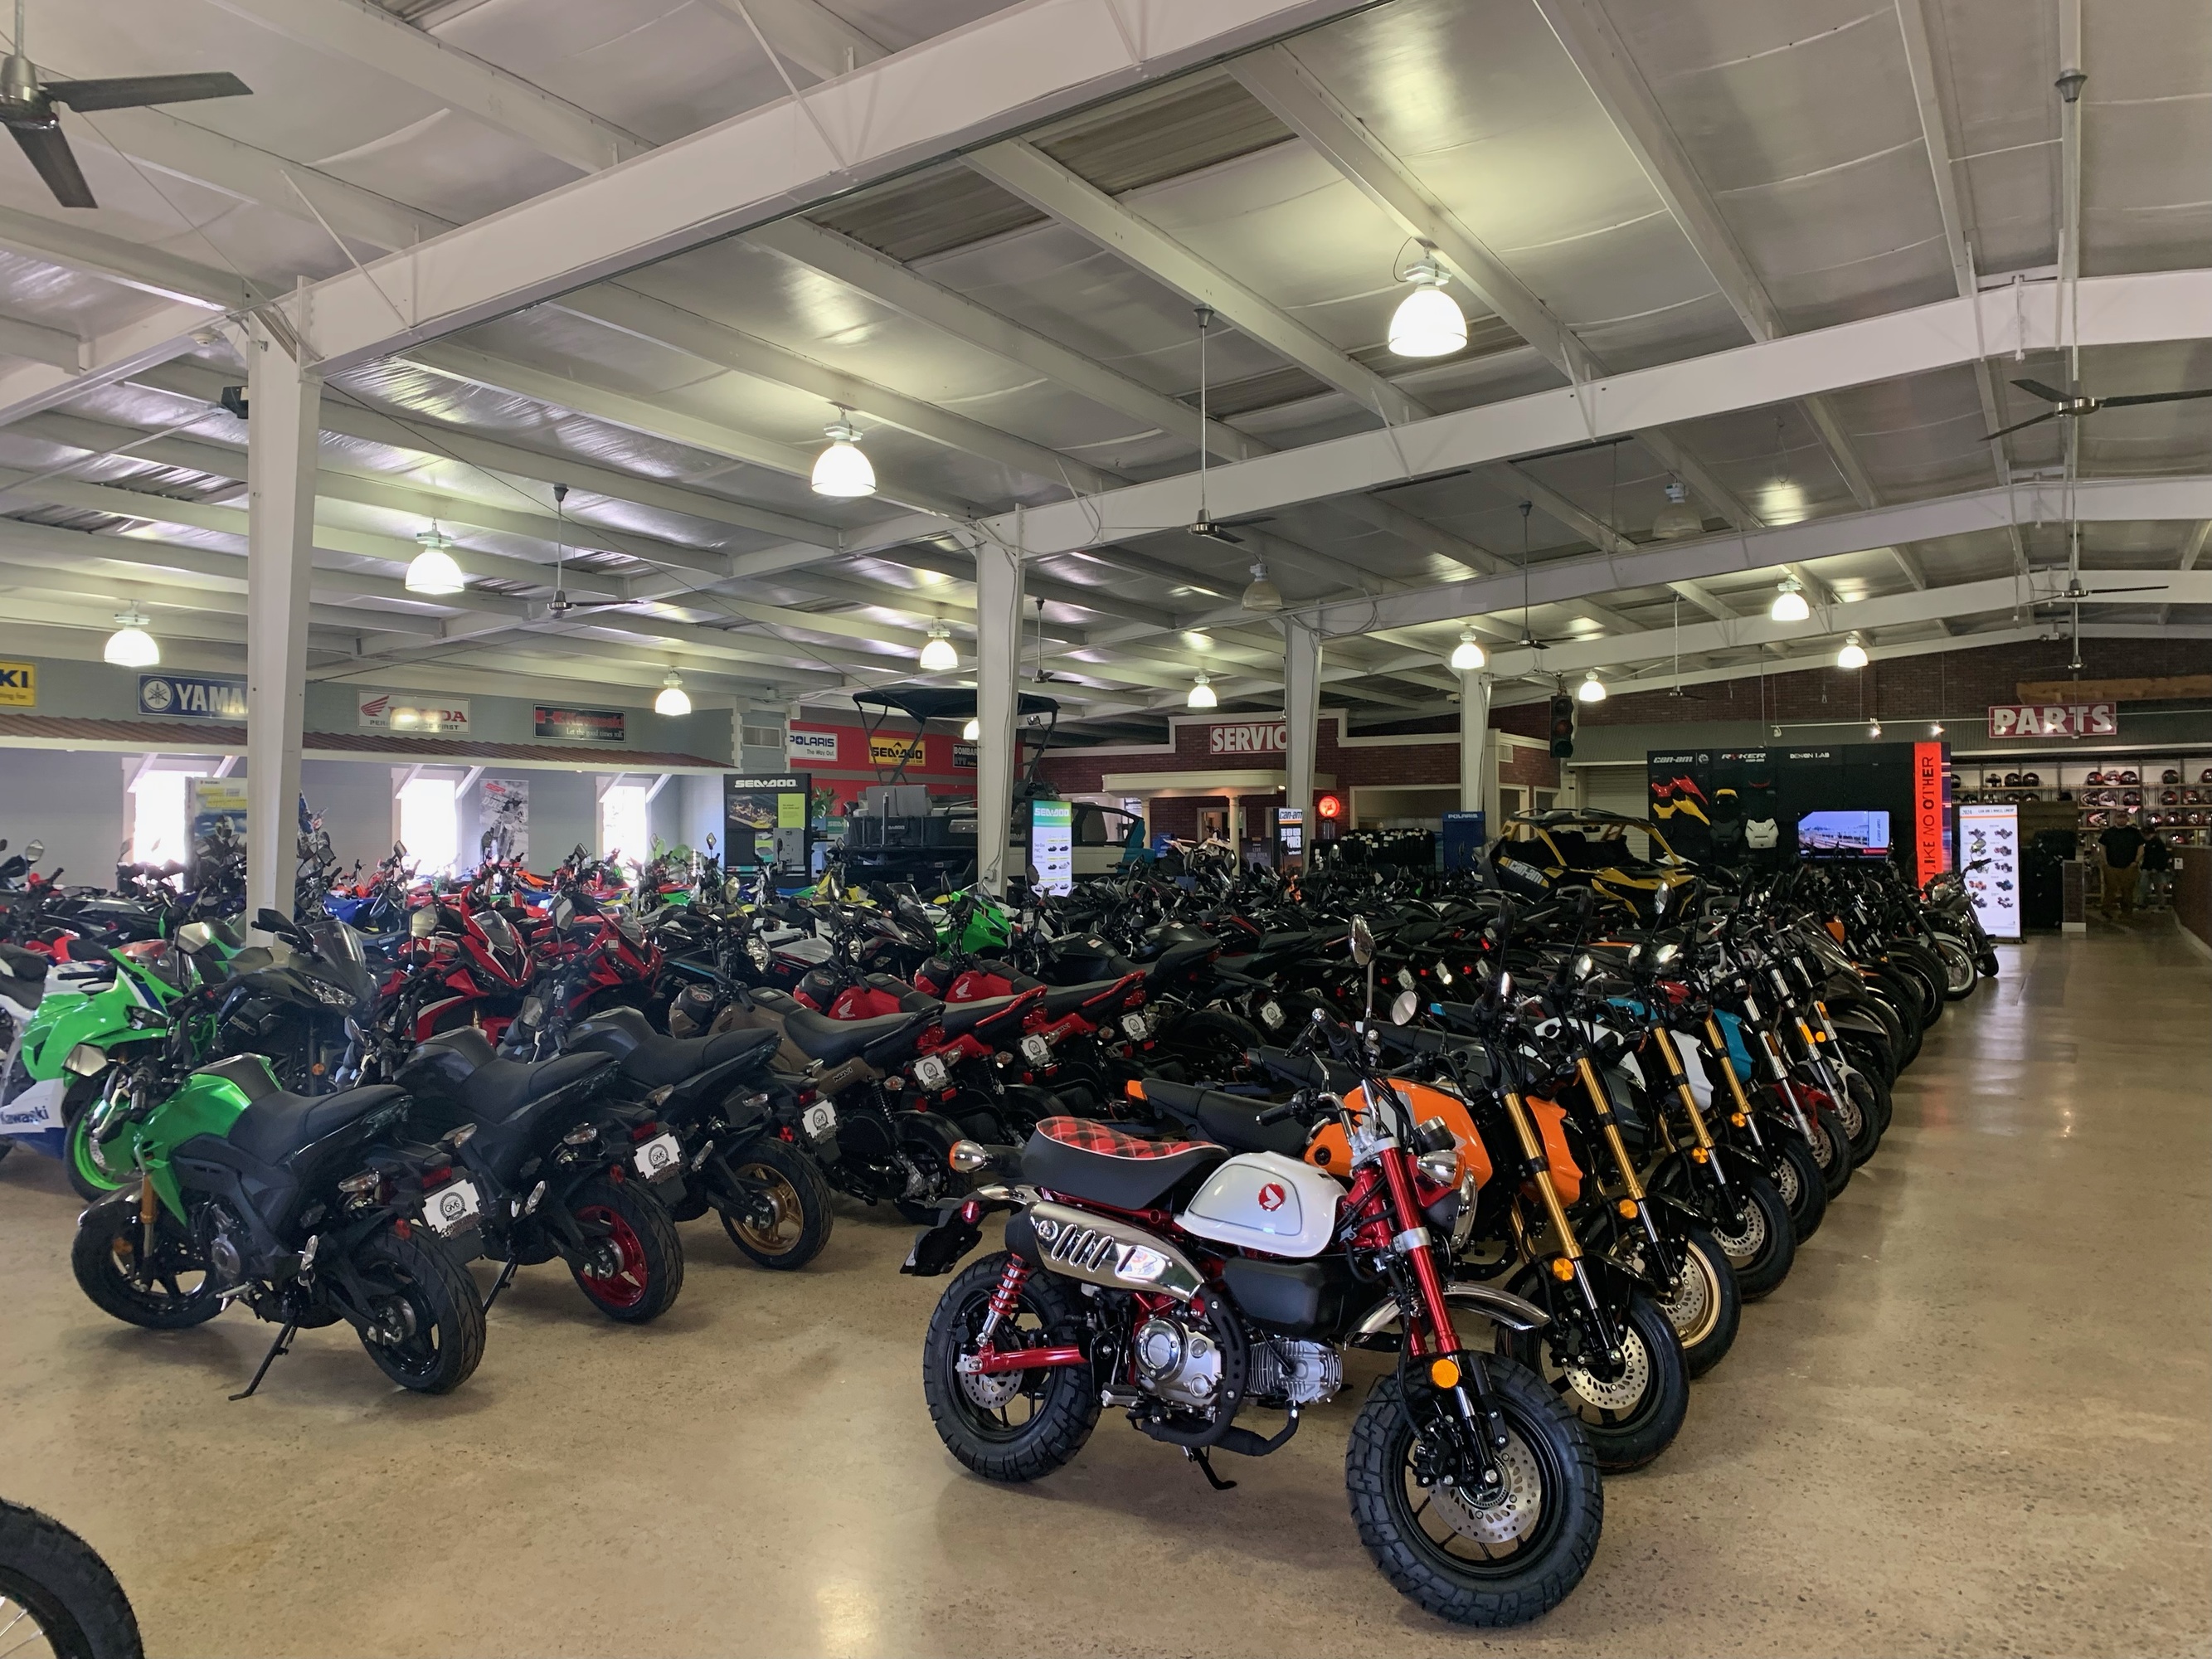 Gainesville Motorsports motorcycle dealer Gainesville, Georgia